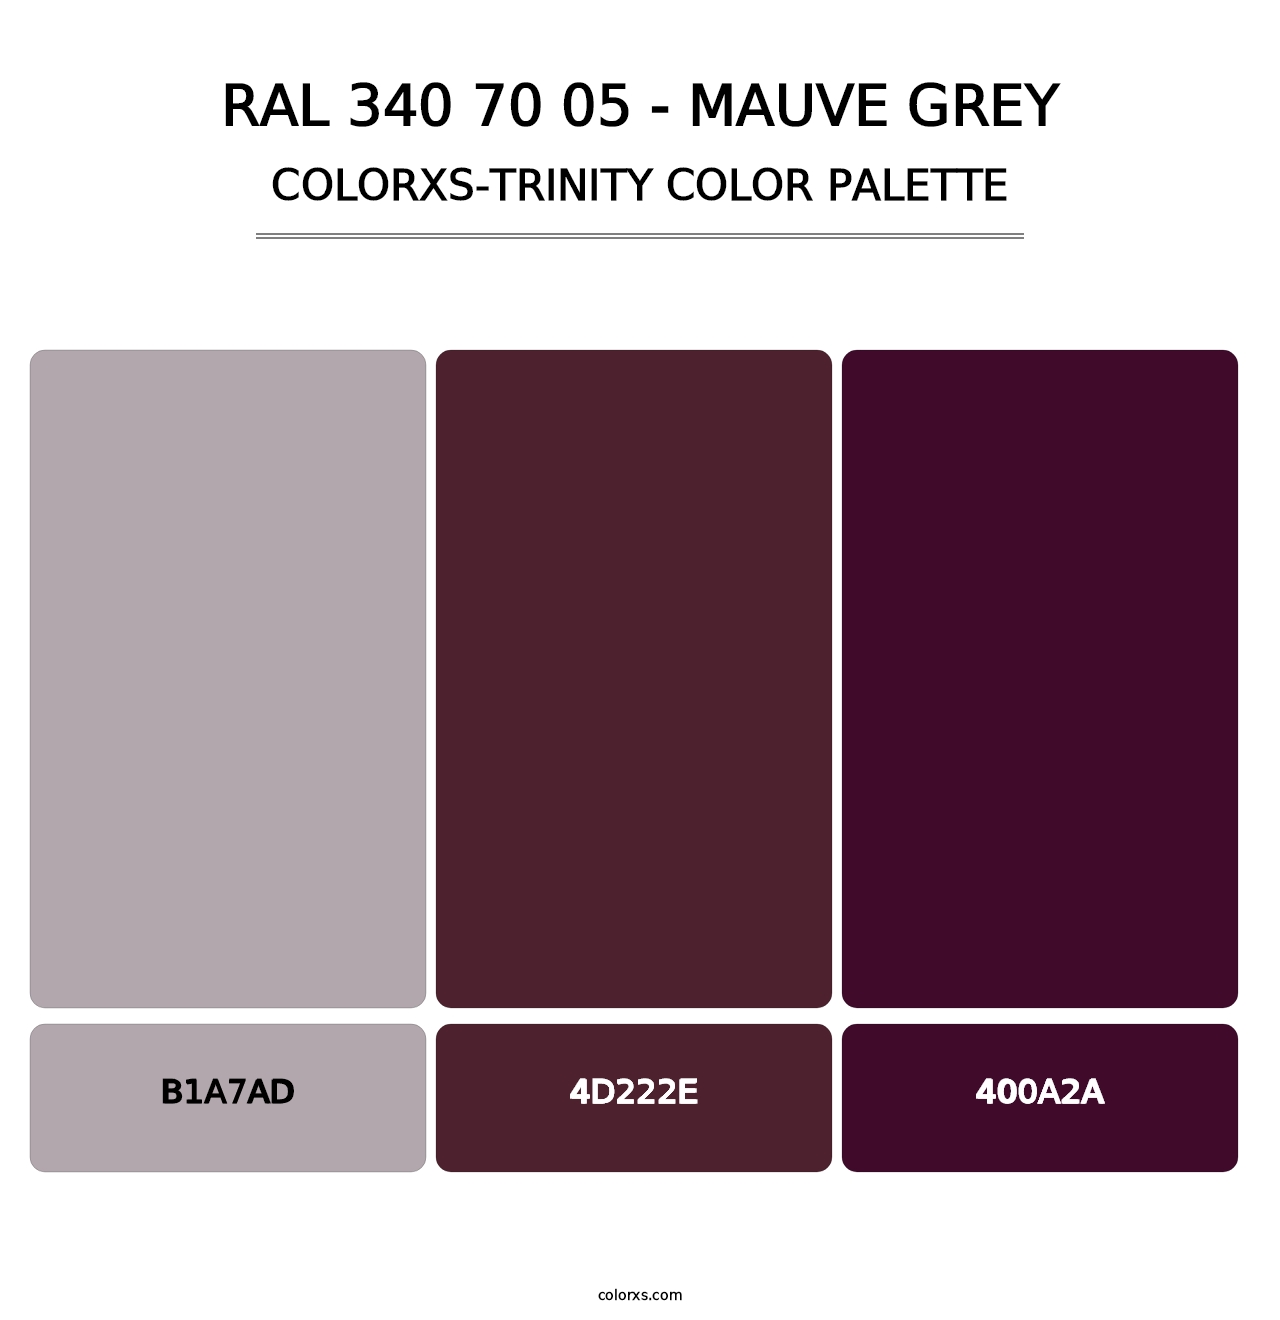 RAL 340 70 05 - Mauve Grey - Colorxs Trinity Palette